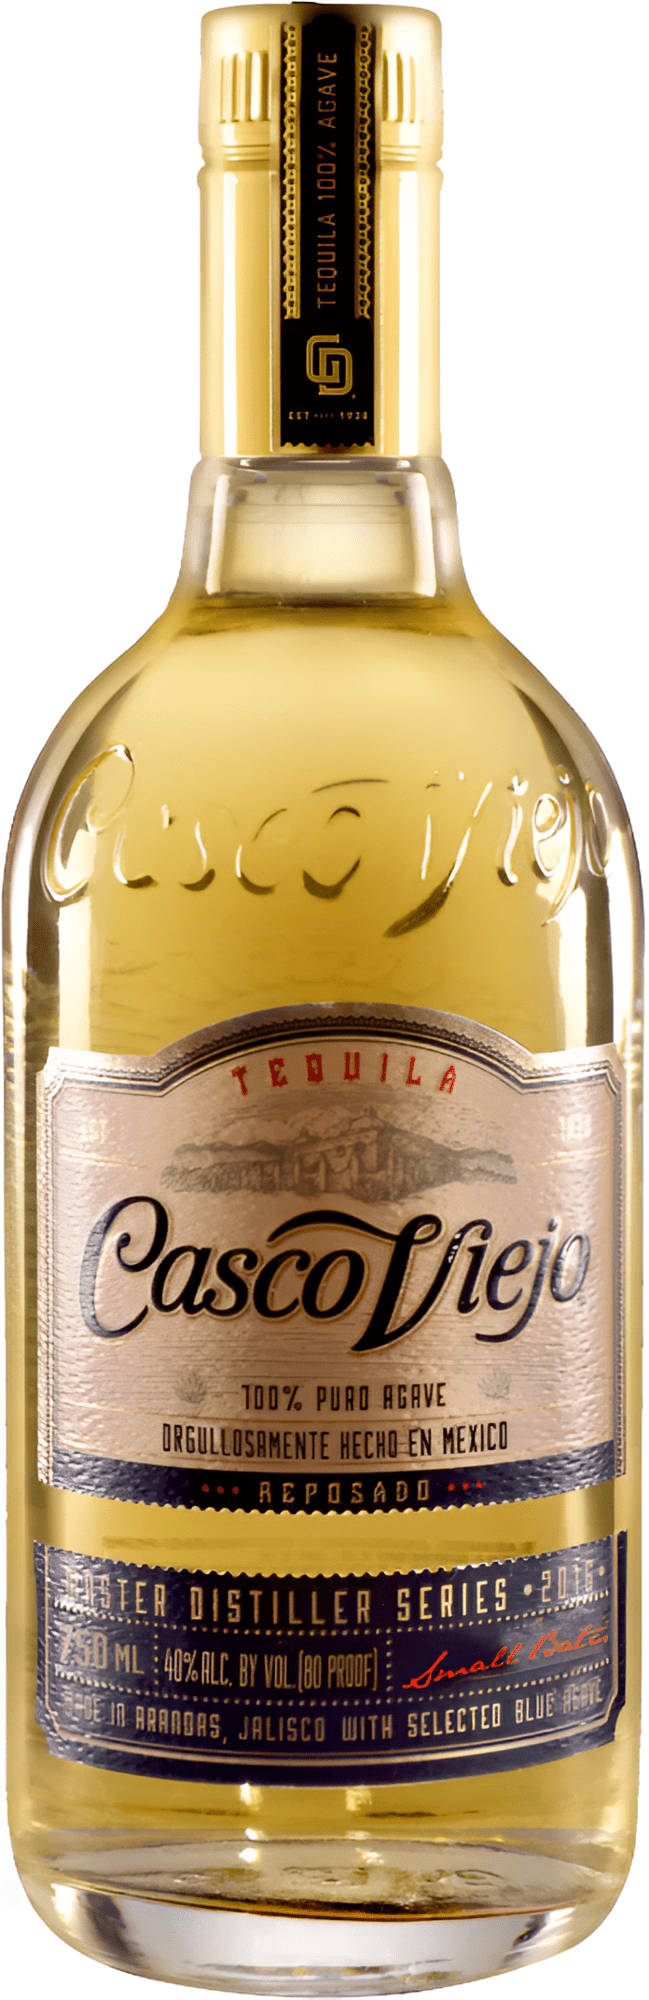 Casco Viejo Reposado Tequila 38% 0,7l